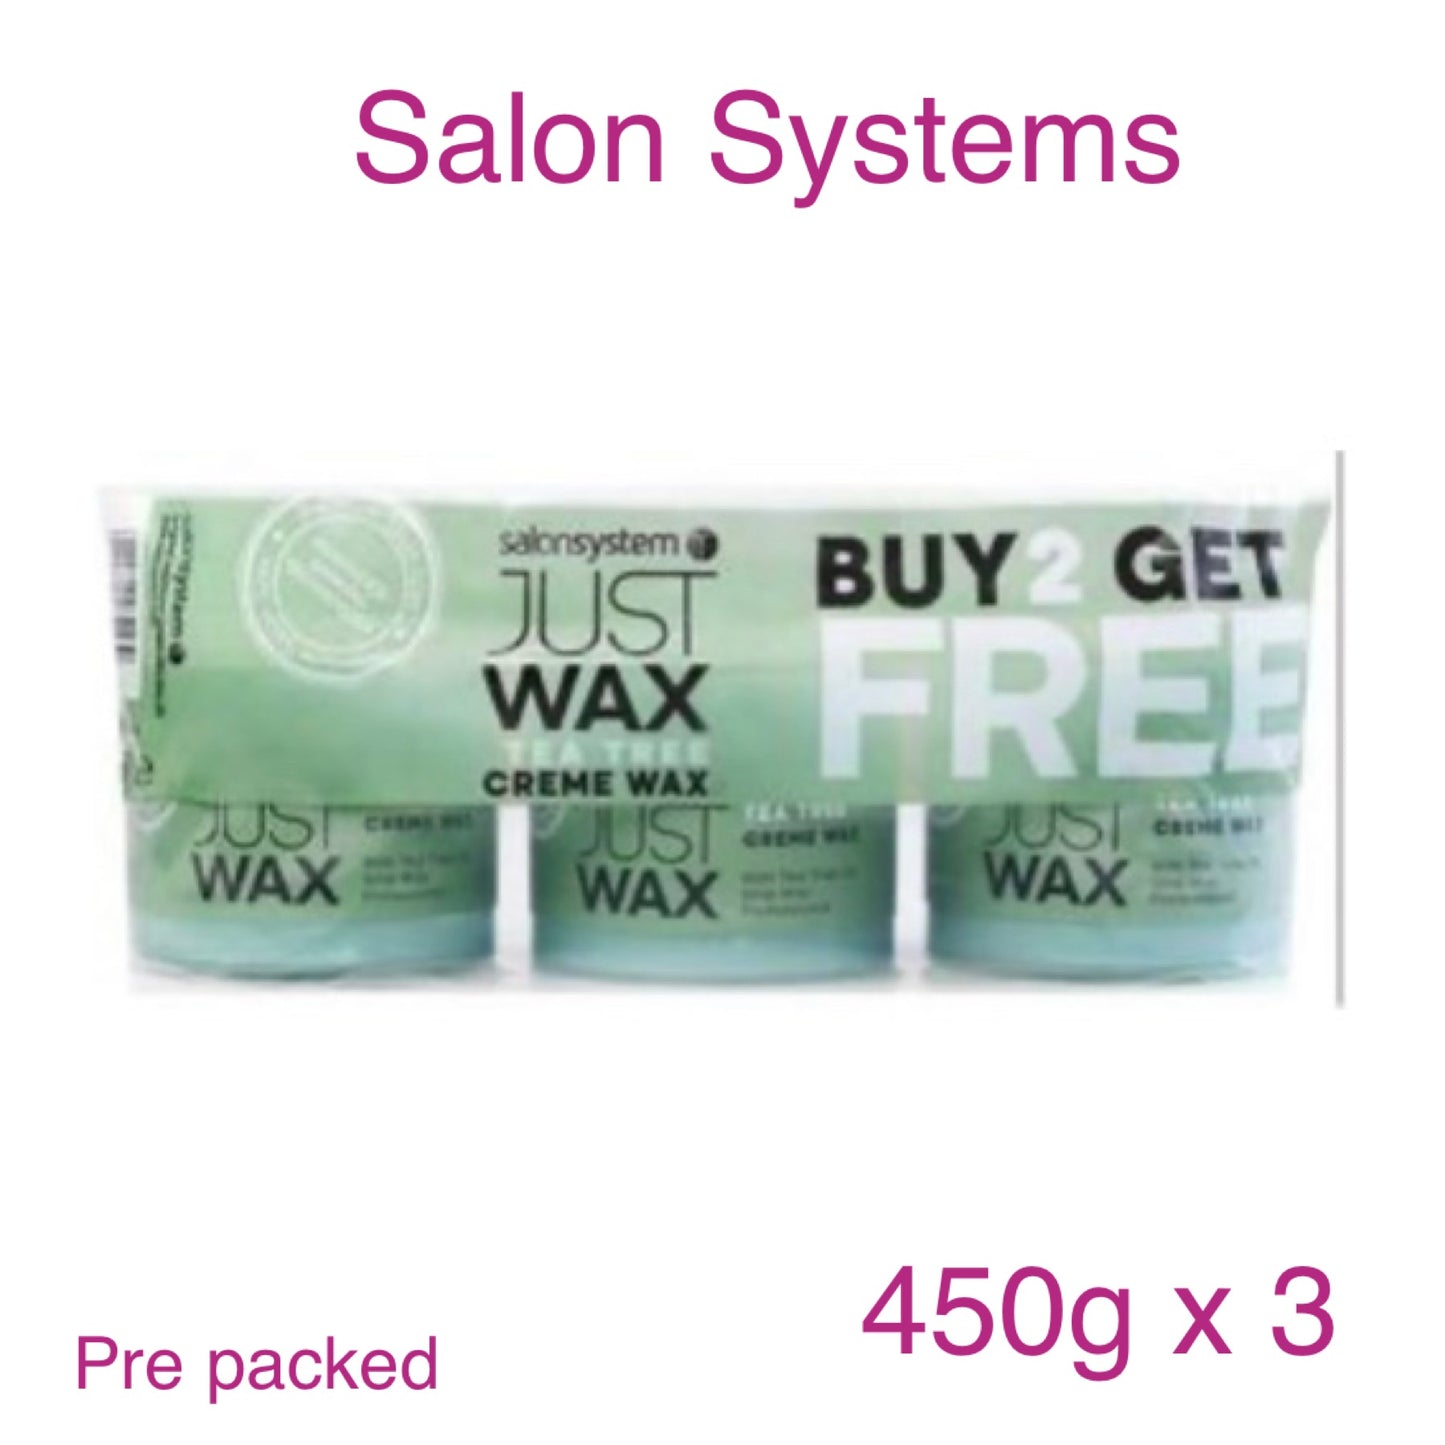 Salon Systems Just Wax Tea Tree Creme Wax (450g) Buy 2 Get 1 Free